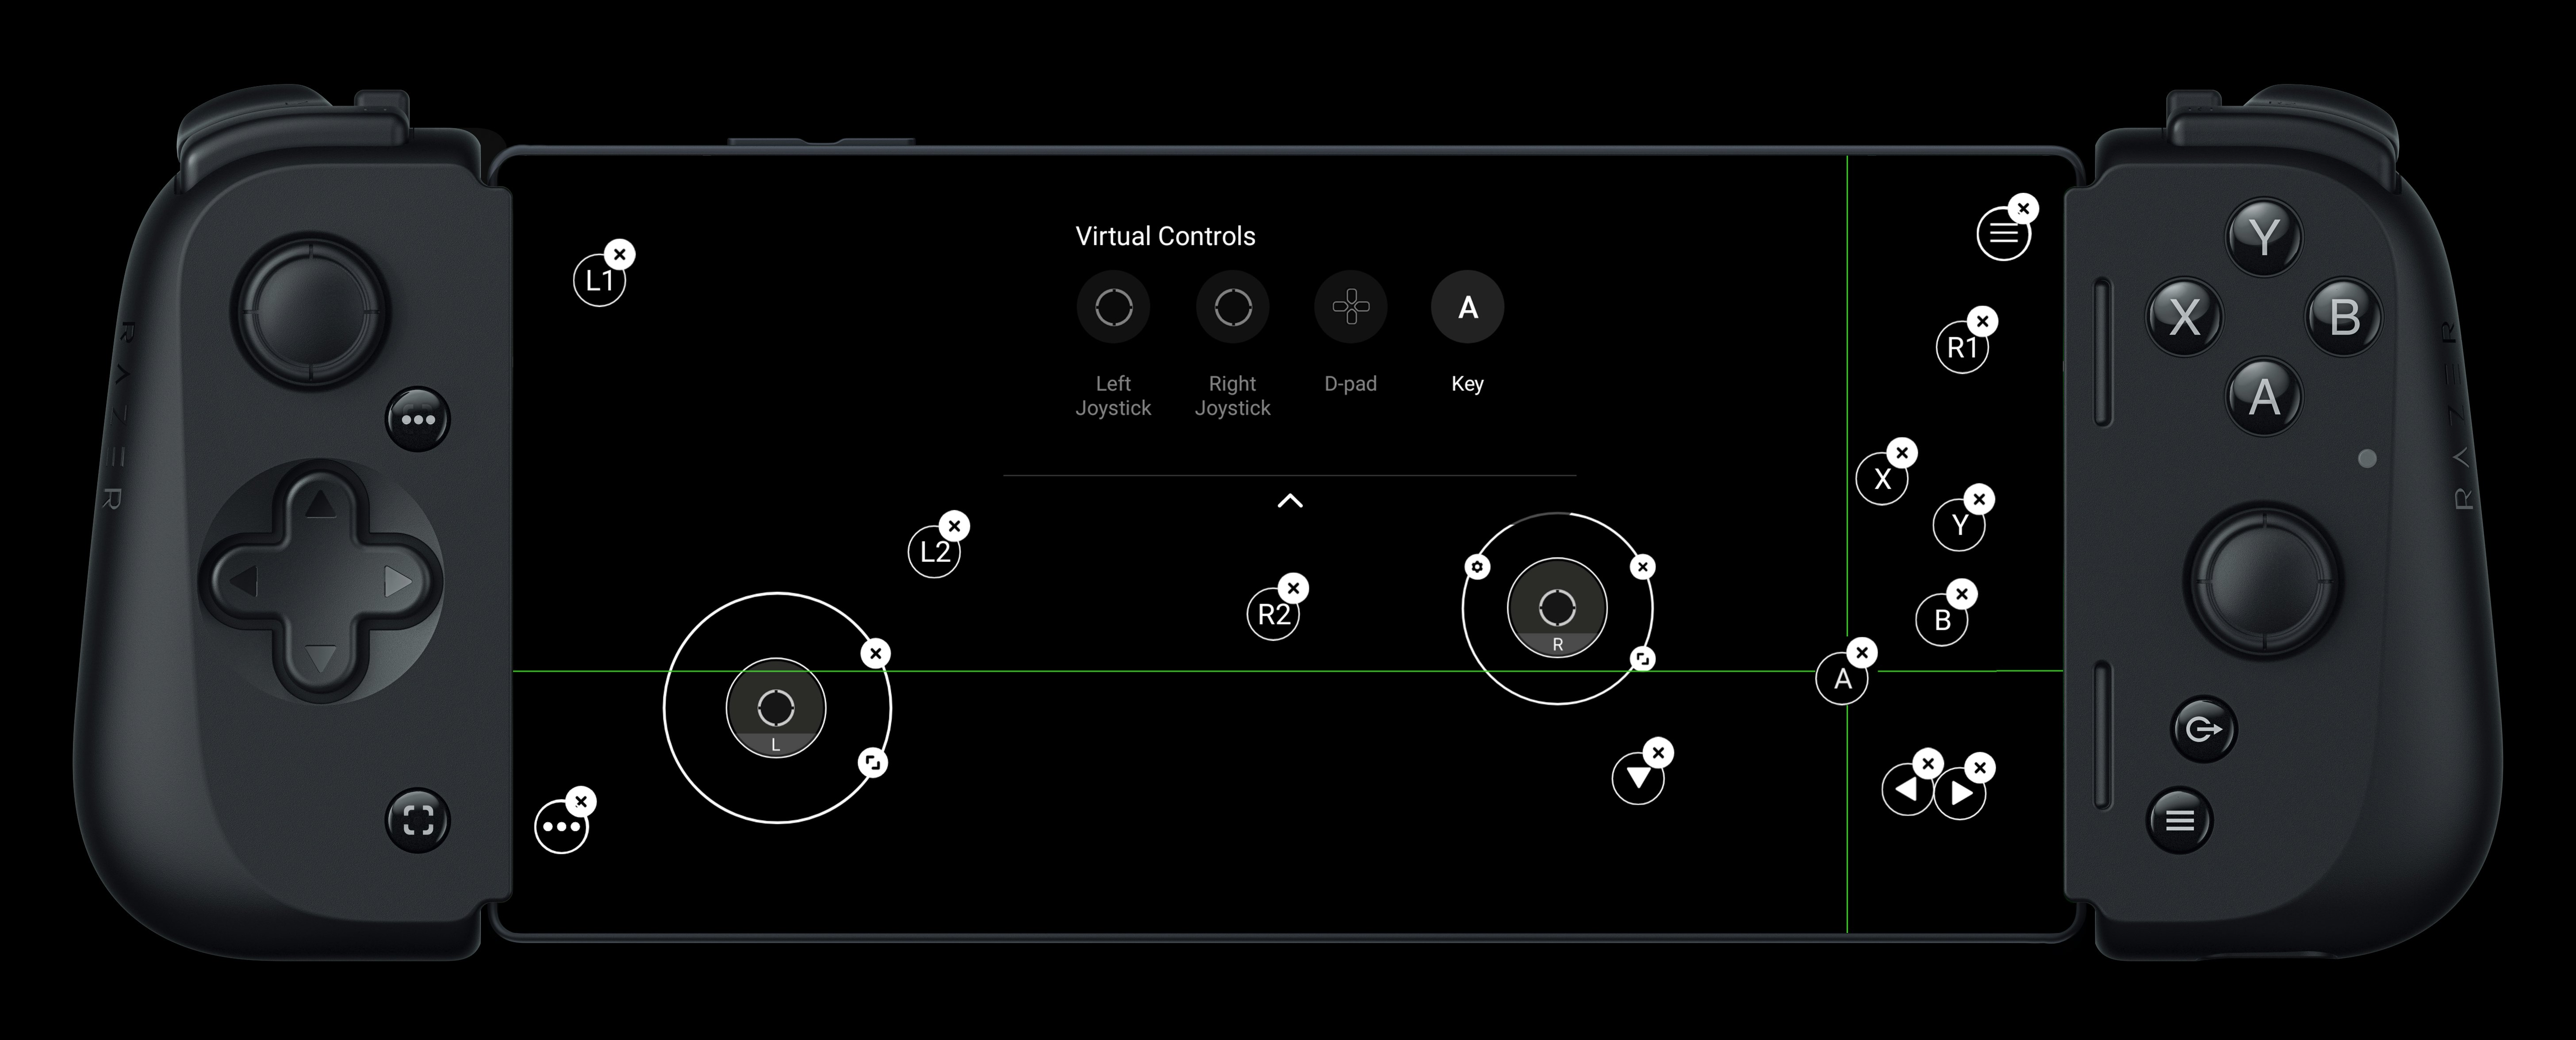 Razer Updates the Kishi V2 With iPhone Support